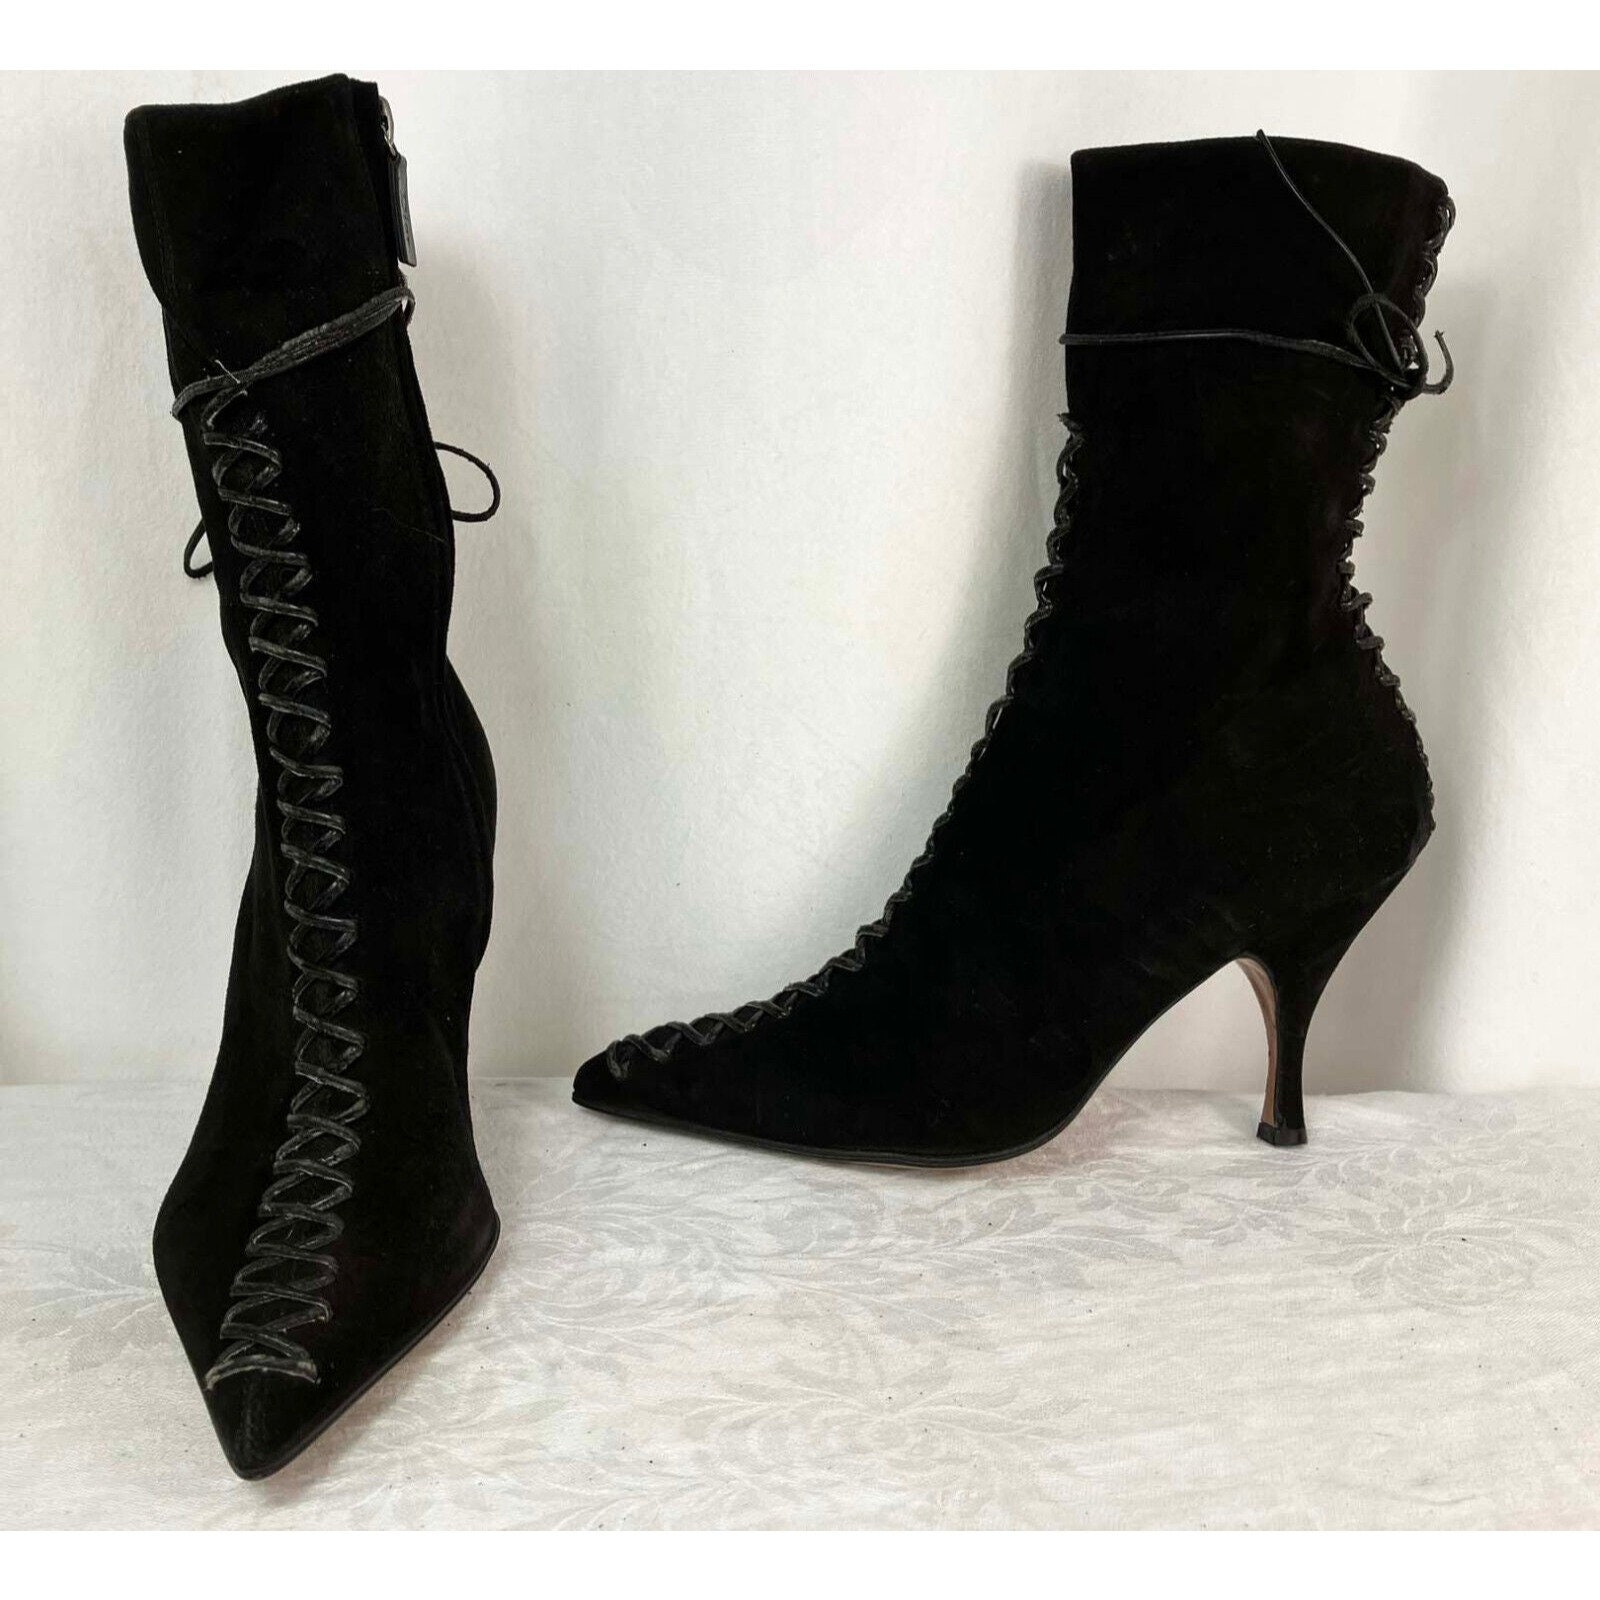 Vintage dior boots 🤩 #dior #christiandior #boots #heels #shoes #black  #halloween #autumn j'adore #love